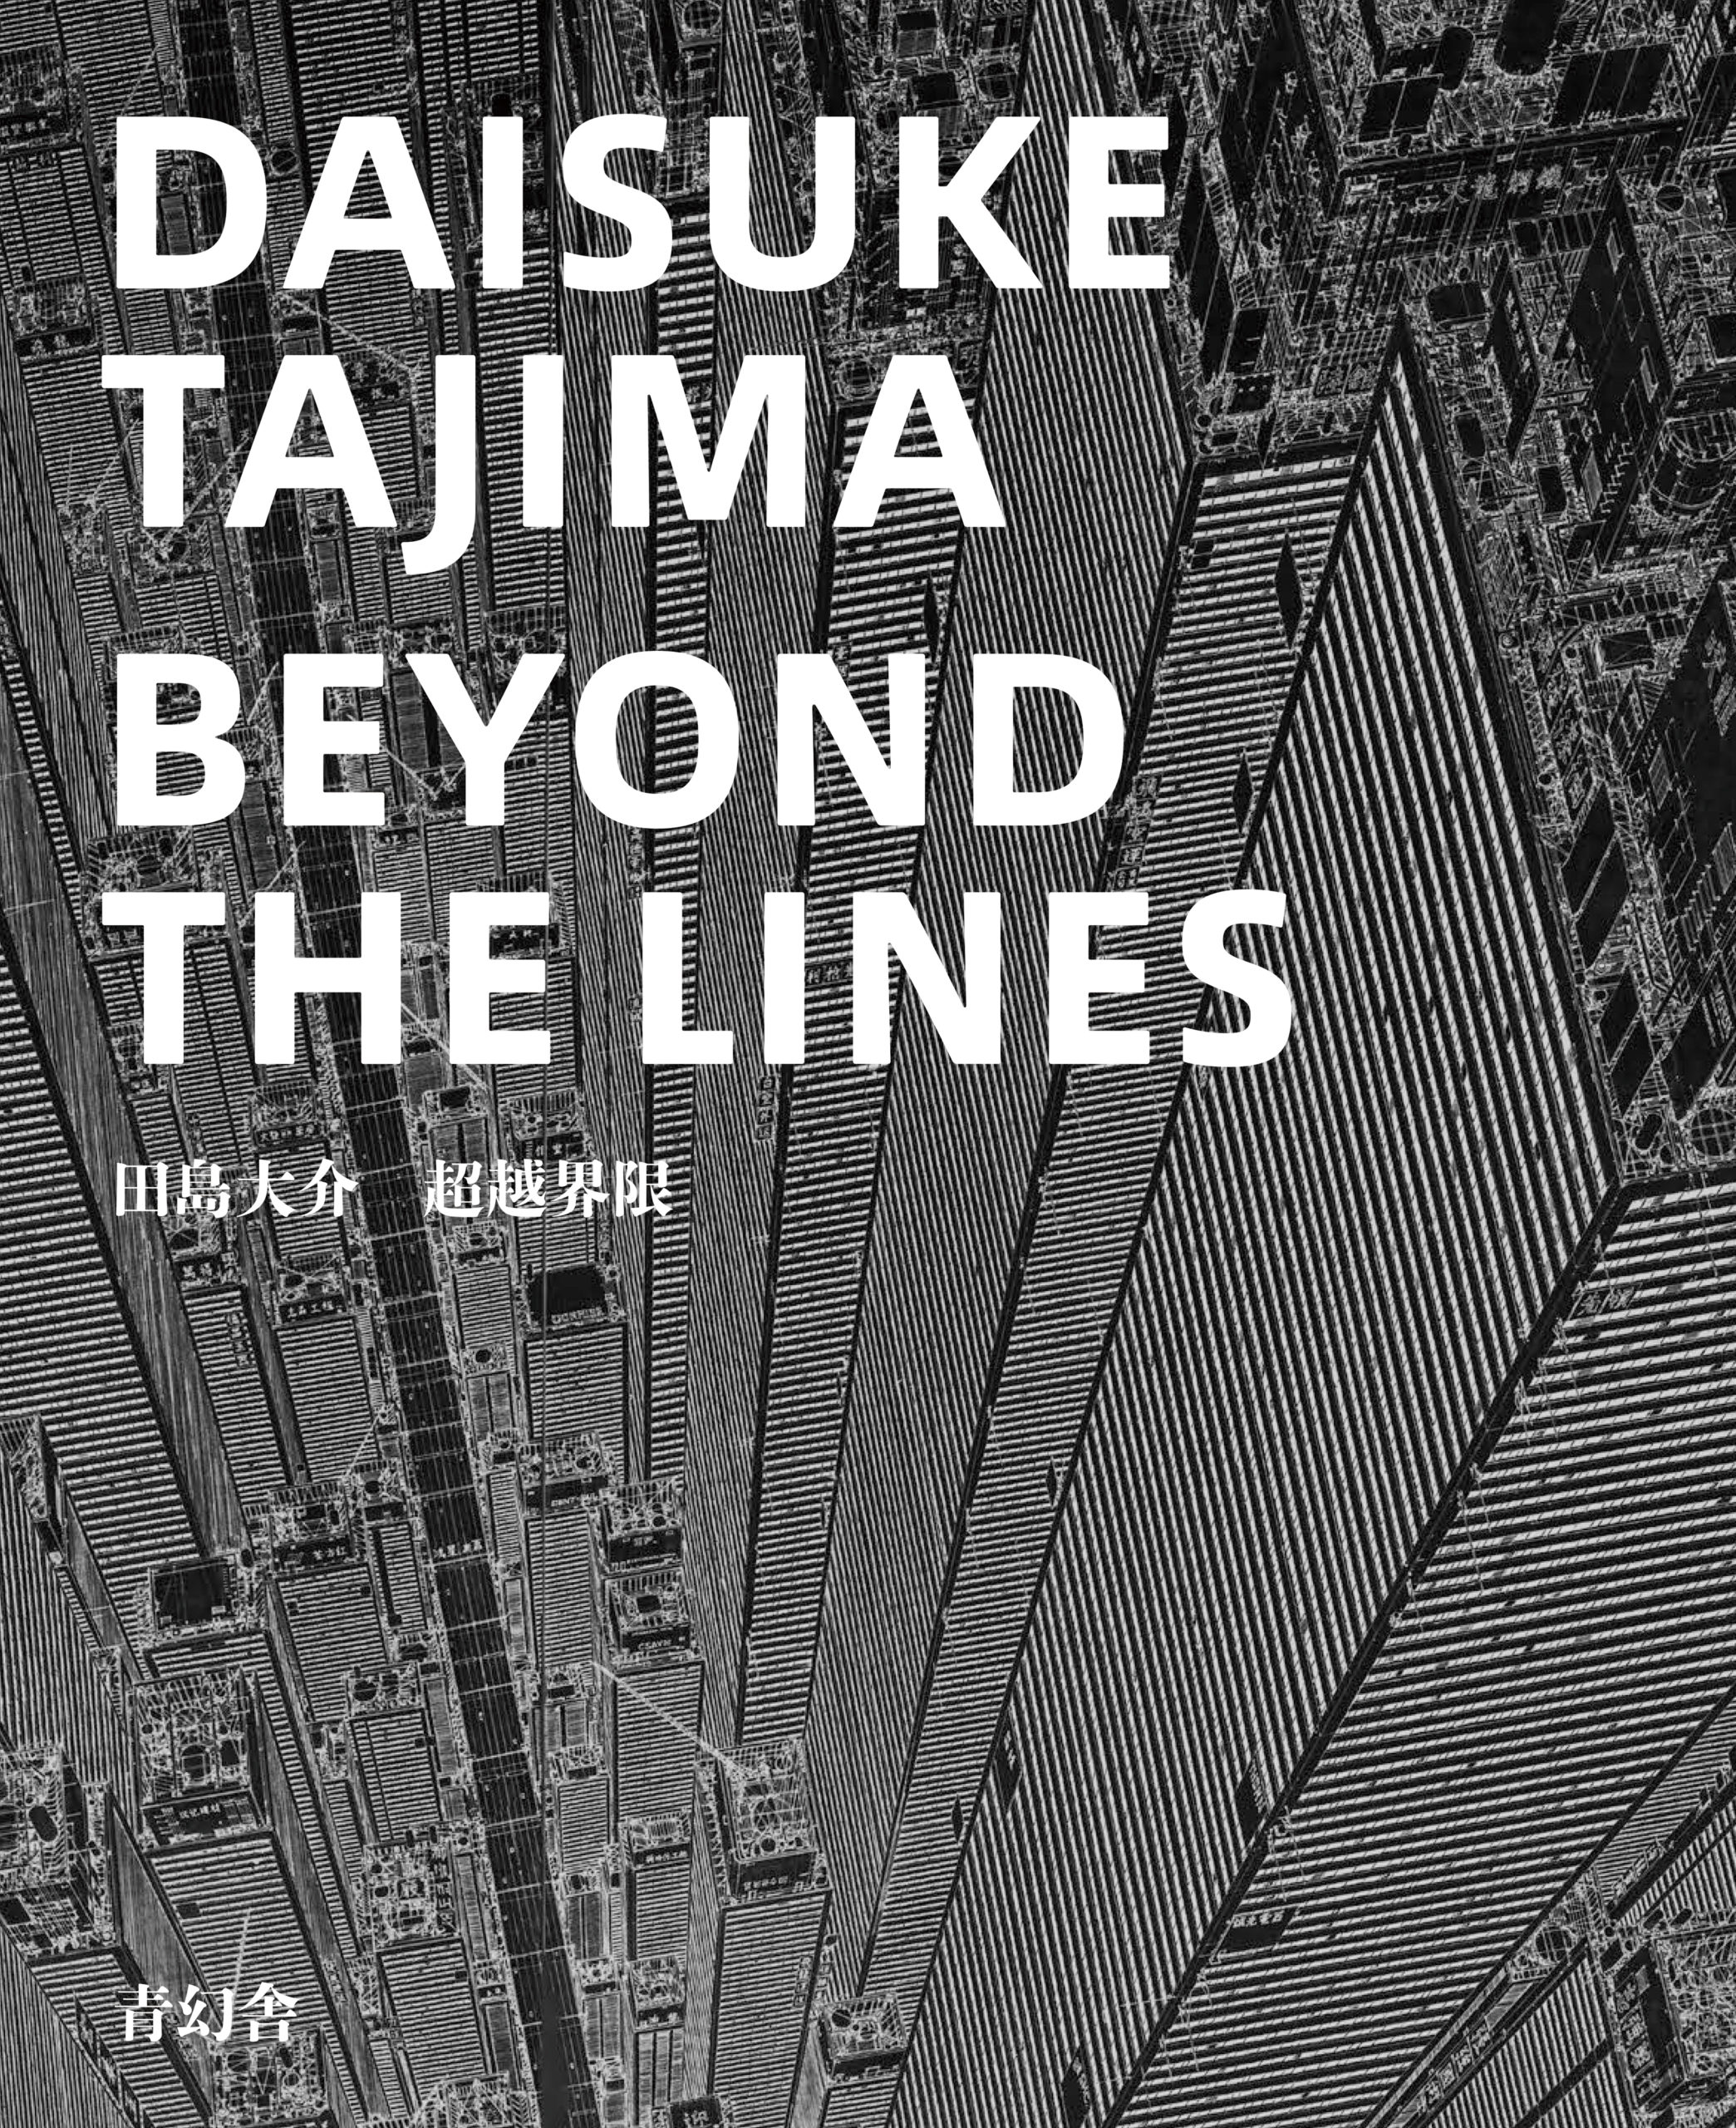 超越界限　DAISUKE TAJIMA BEYOND THE LINES